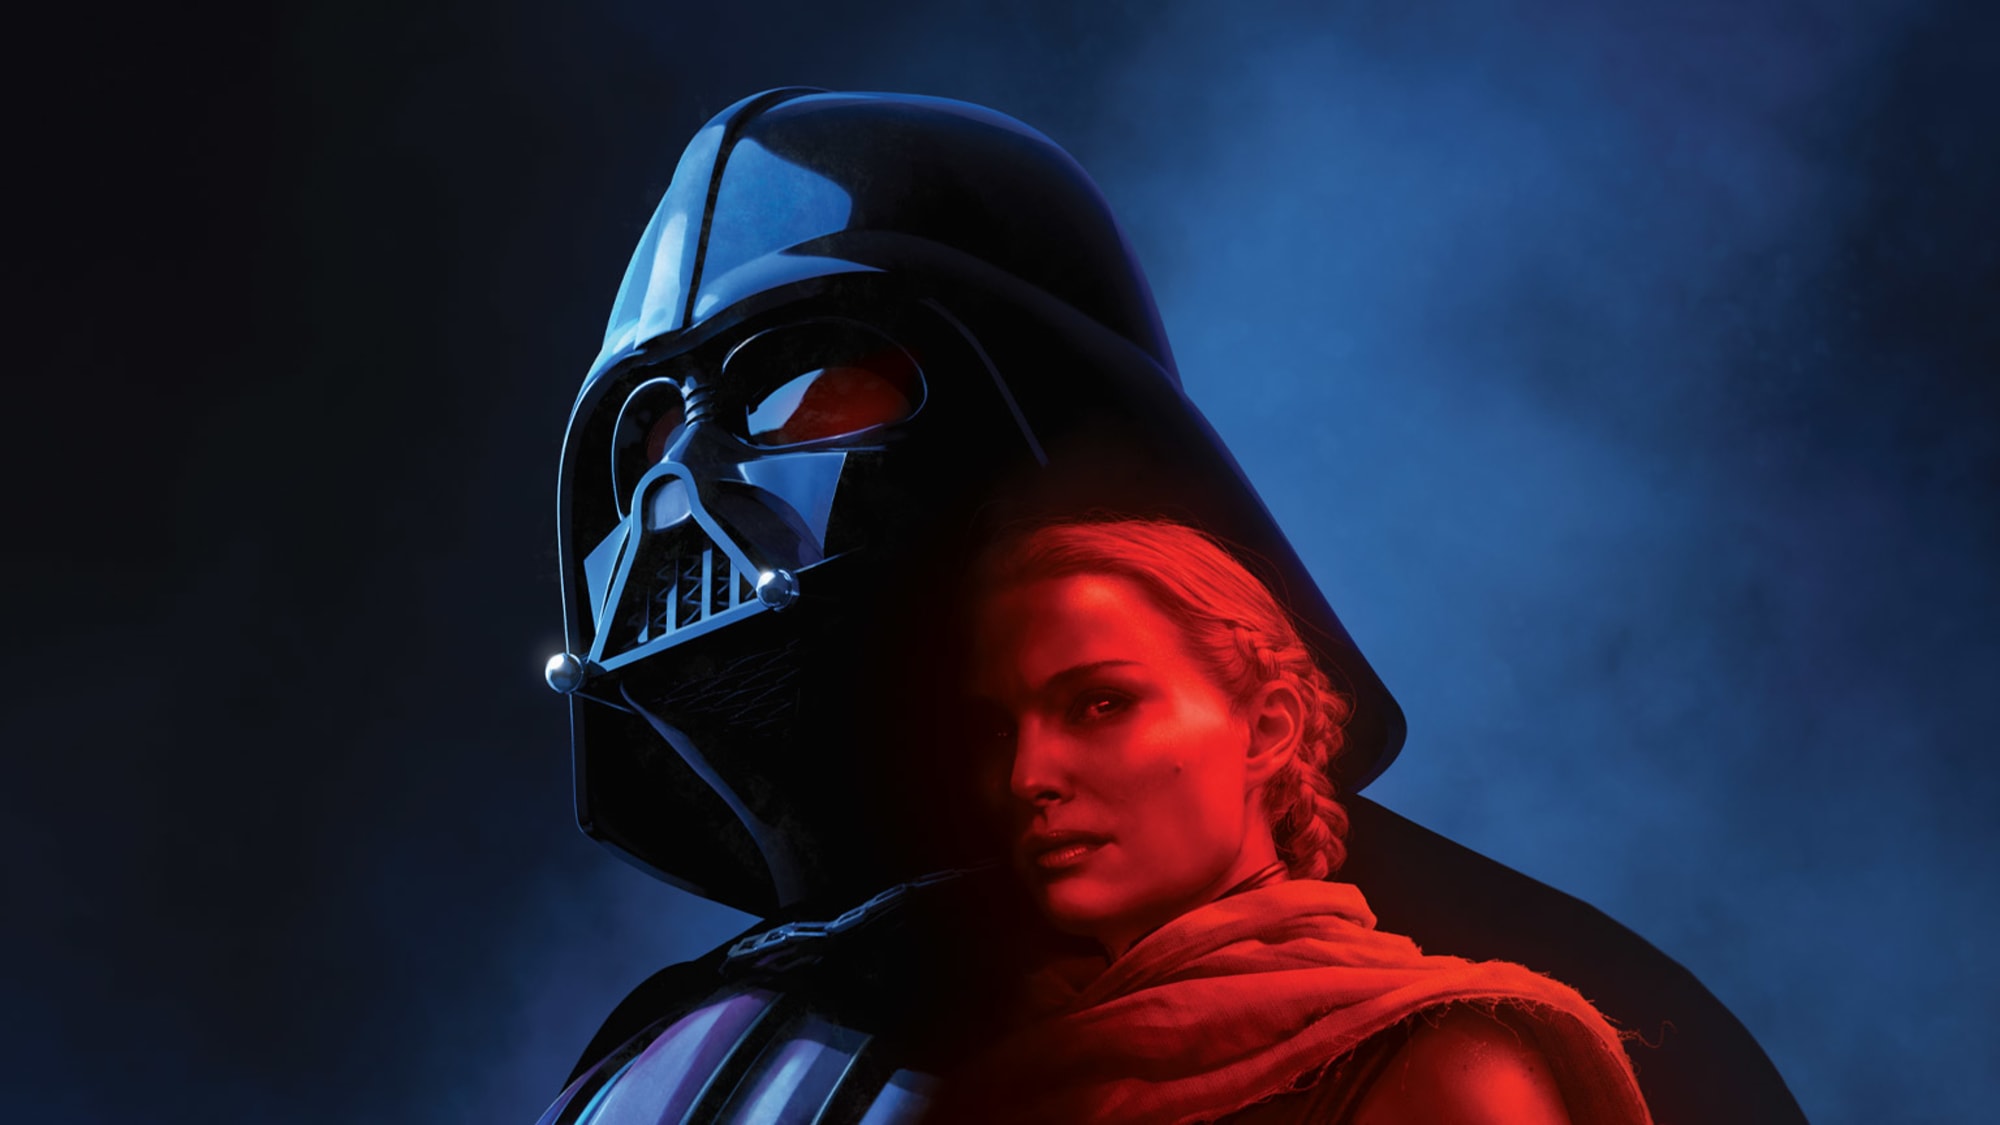 Jaar De voering New Star Wars comics this week: Darth Vader, The Mandalorian, and more